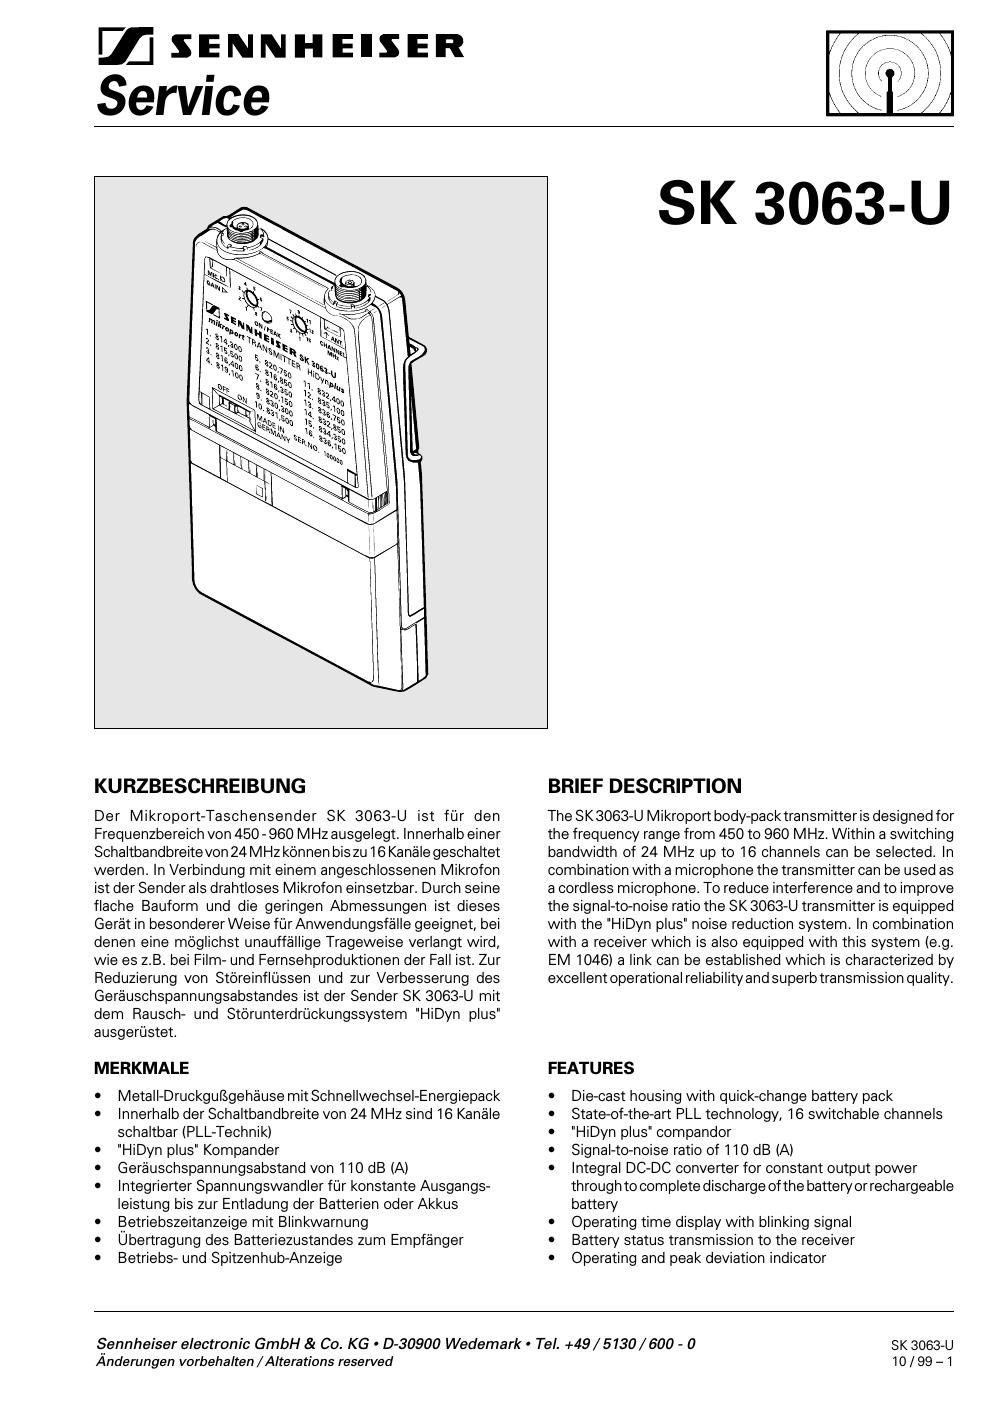 sennheiser sk 3063 u wireless tx service manual